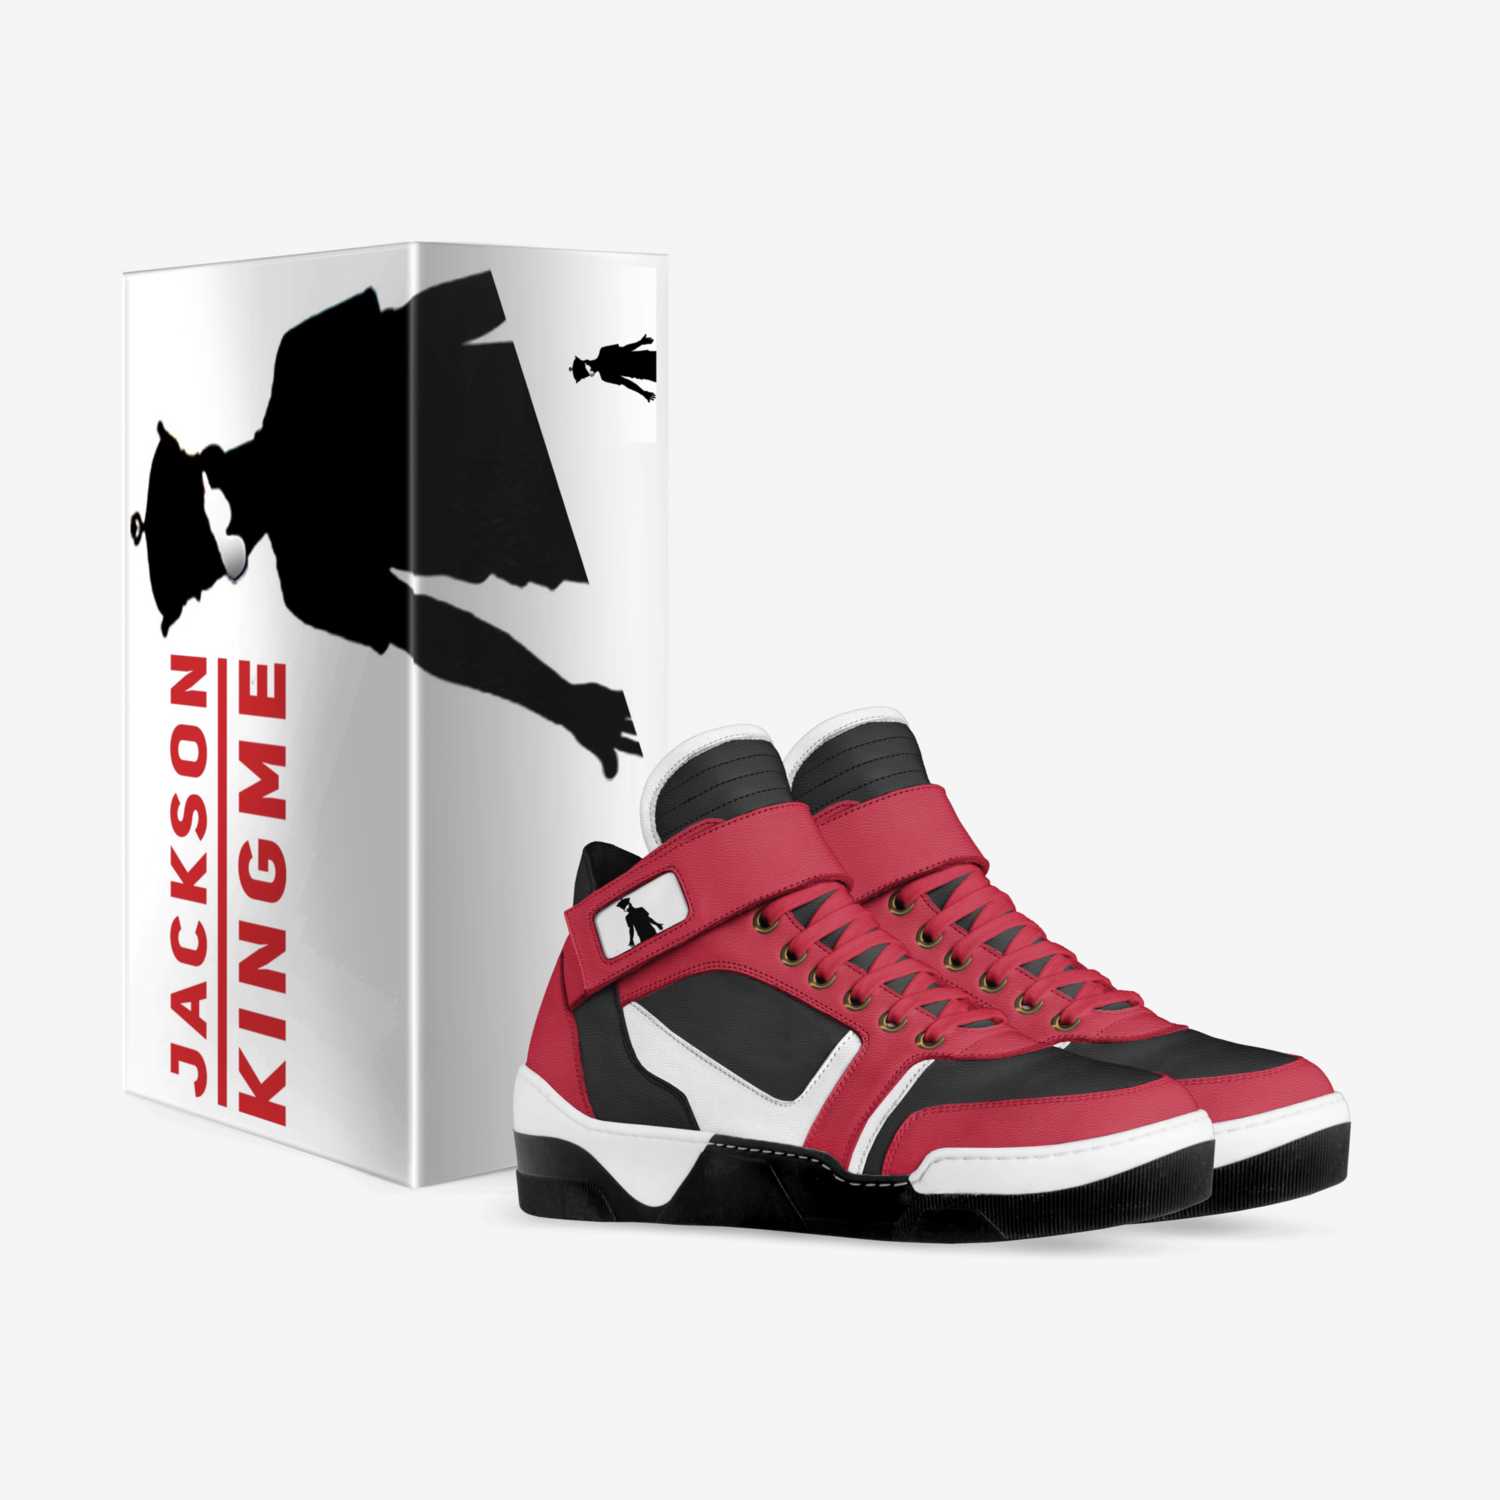 Jackson I custom made in Italy shoes by Nio Jackson | Box view